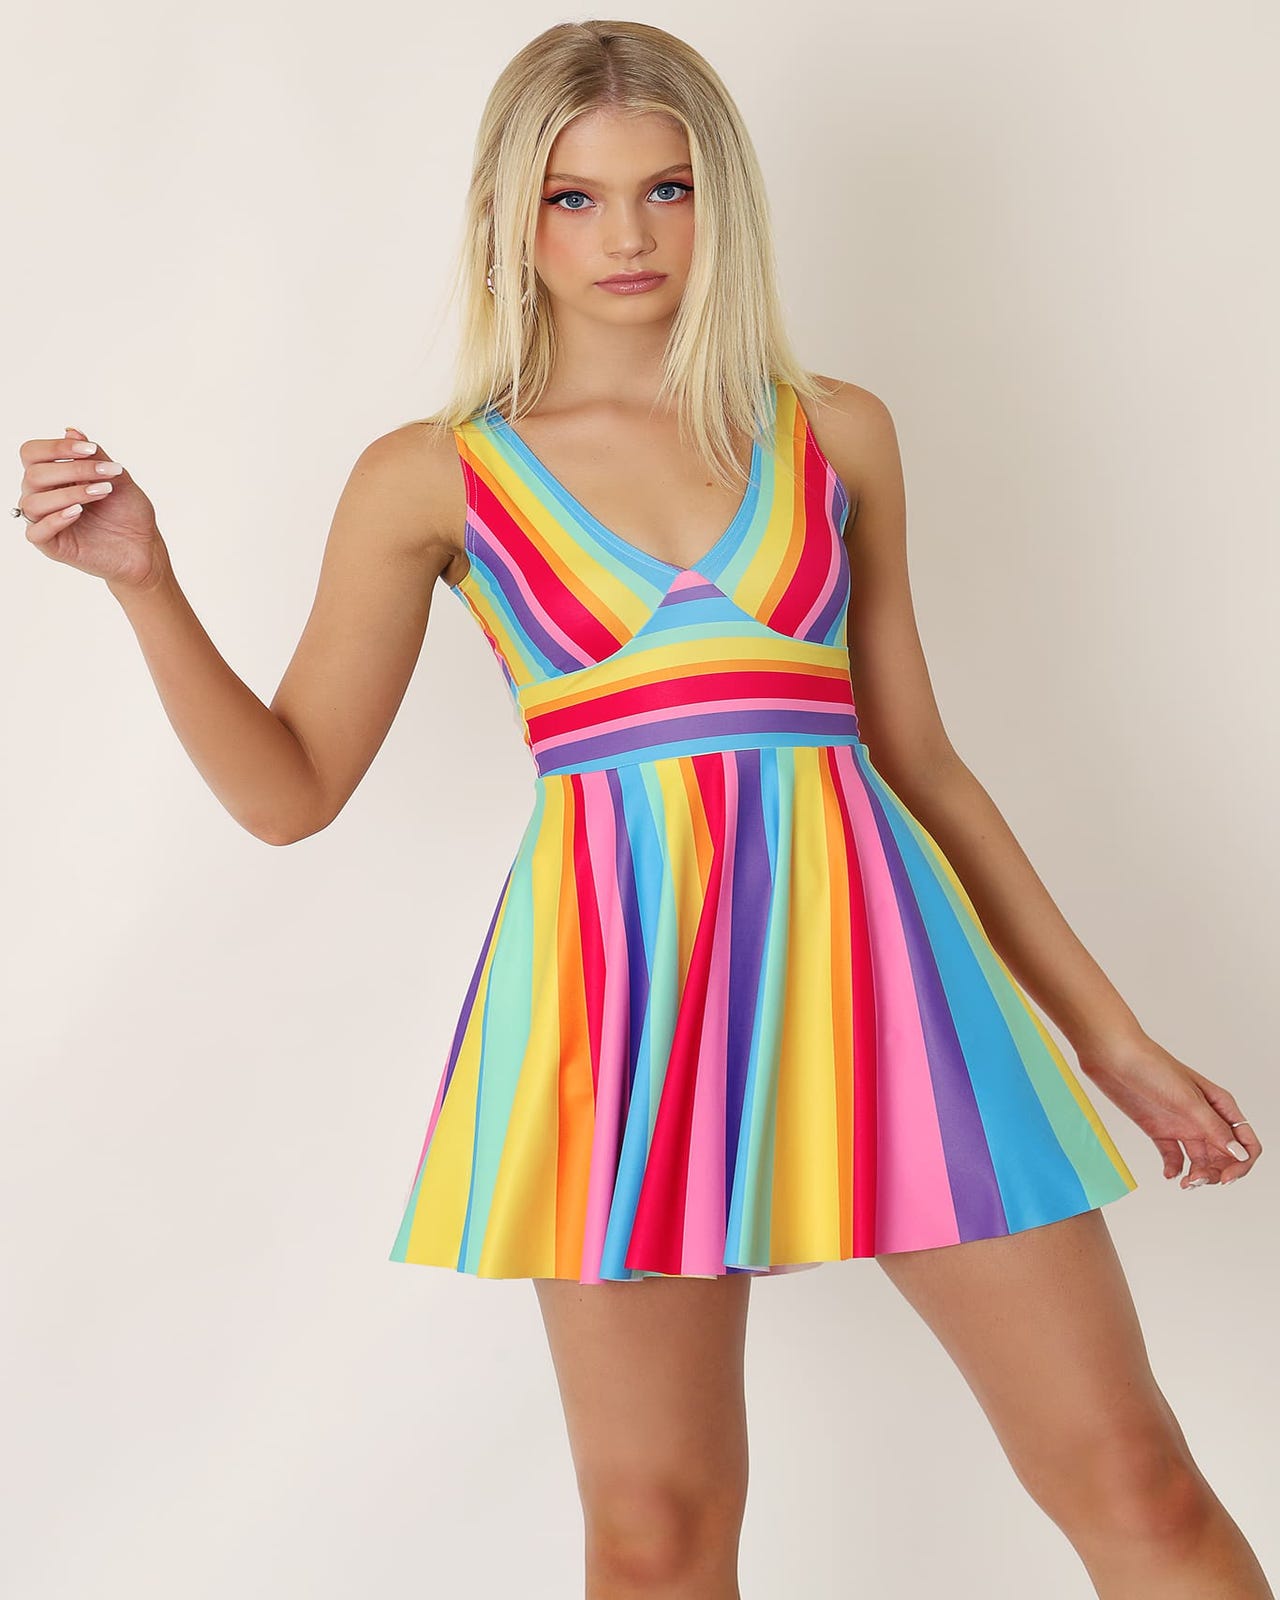 Candy Stripe Marilyn Dress - Limited